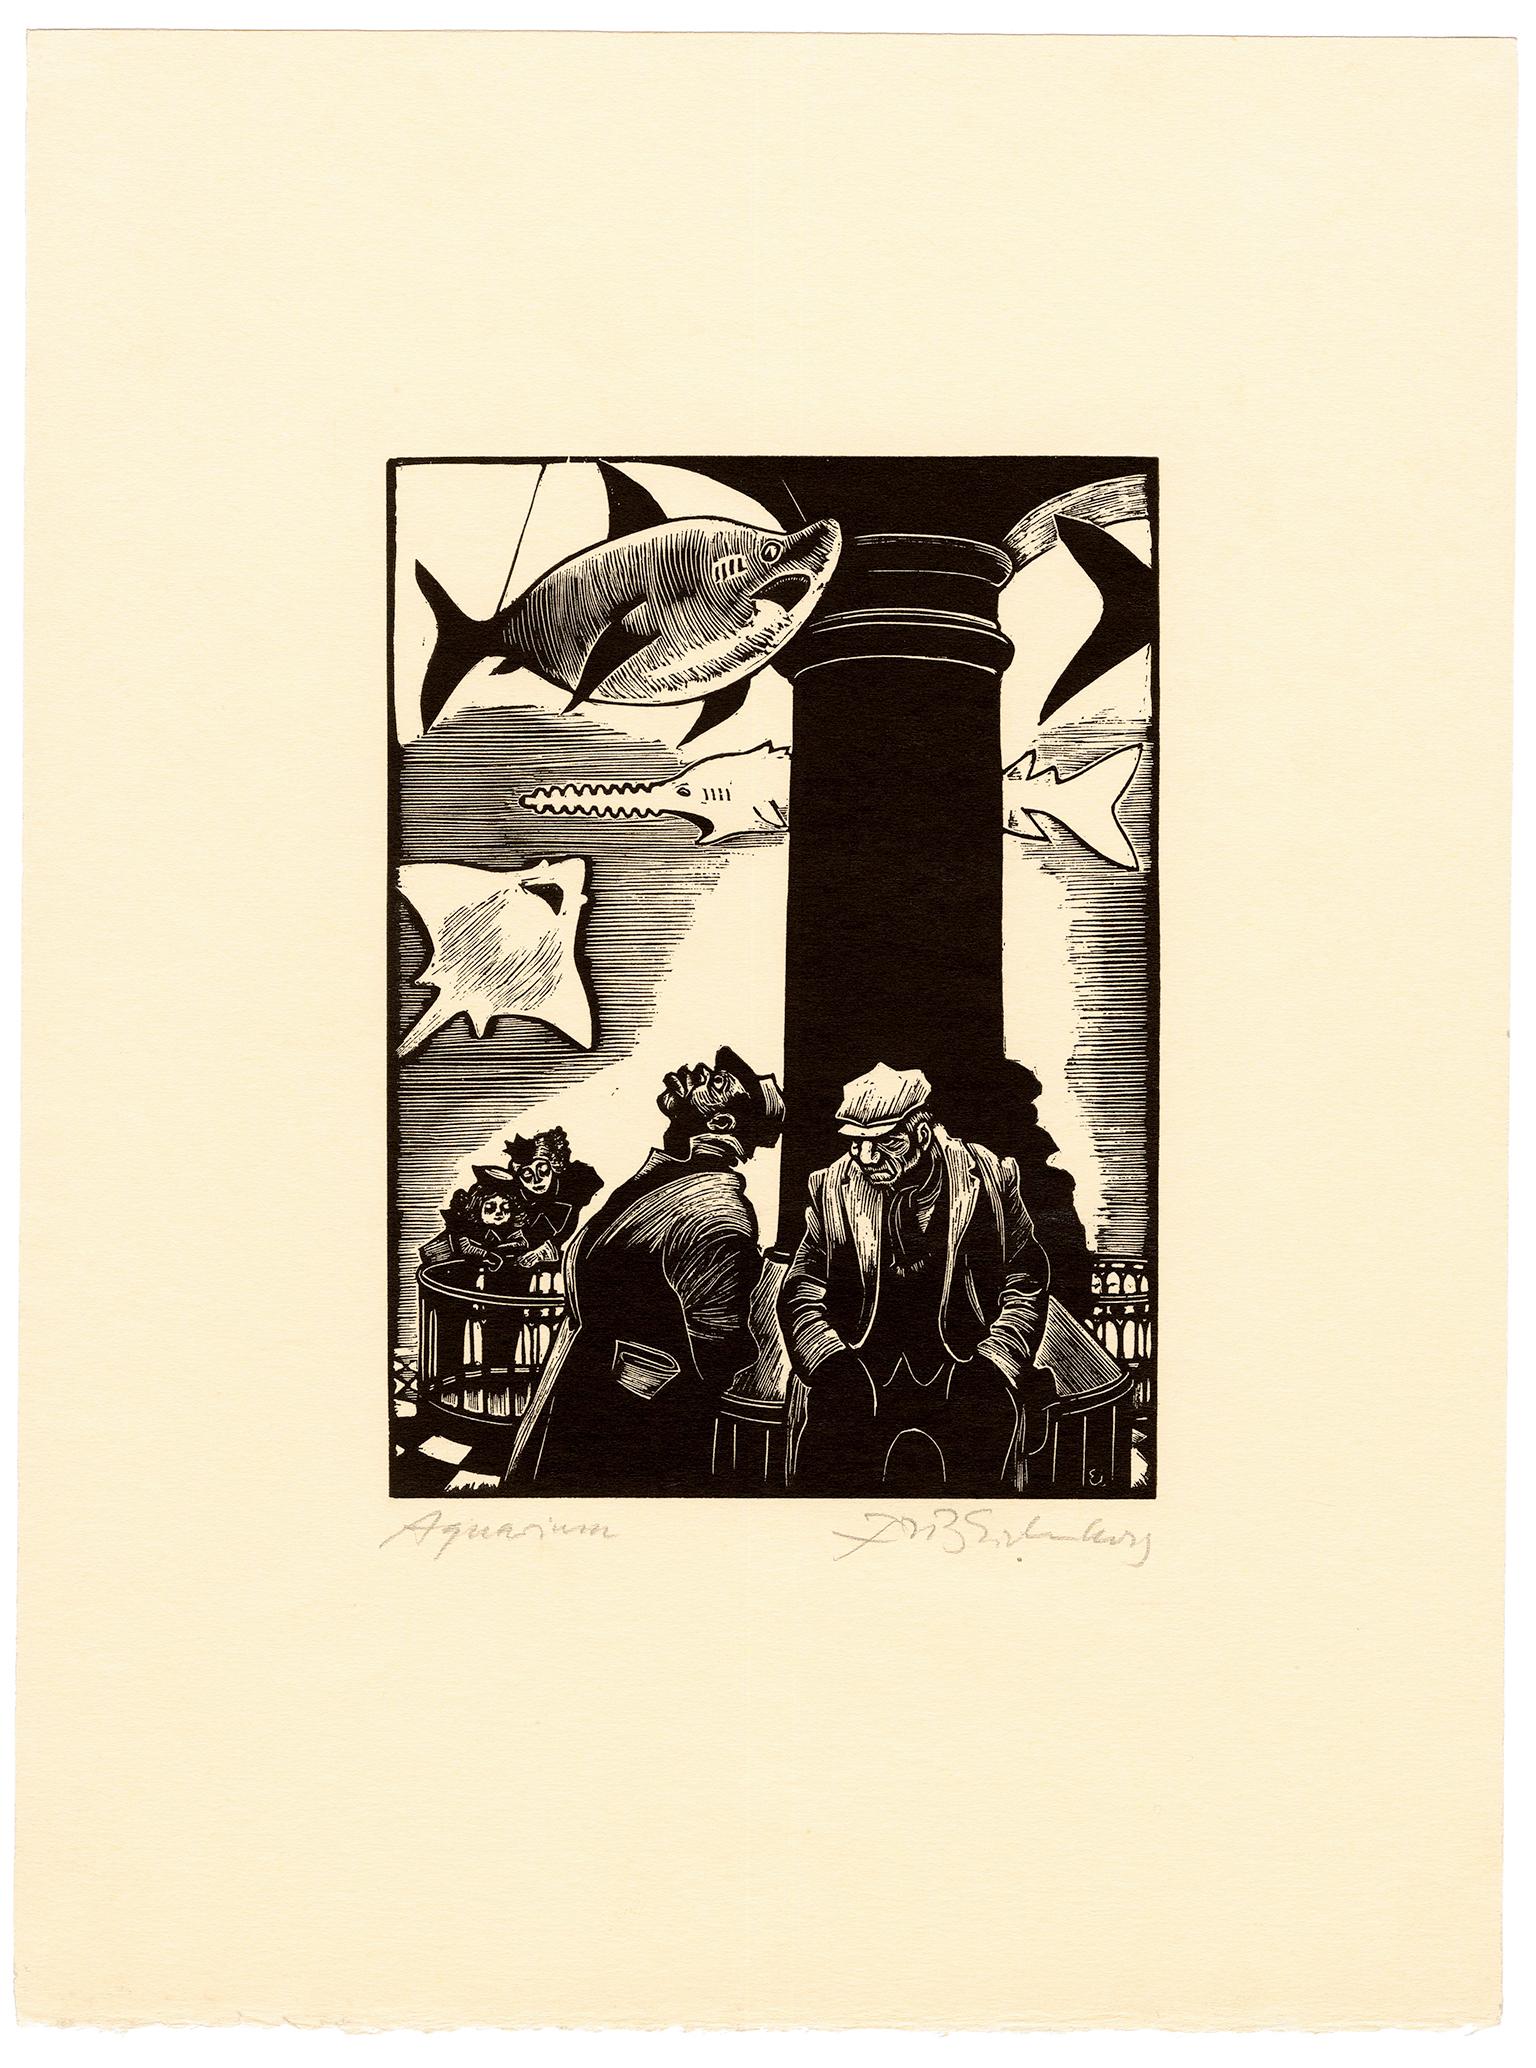 'The Aquarium' — WPA Era 1930s Graphic Modernism - Print by Fritz Eichenberg.